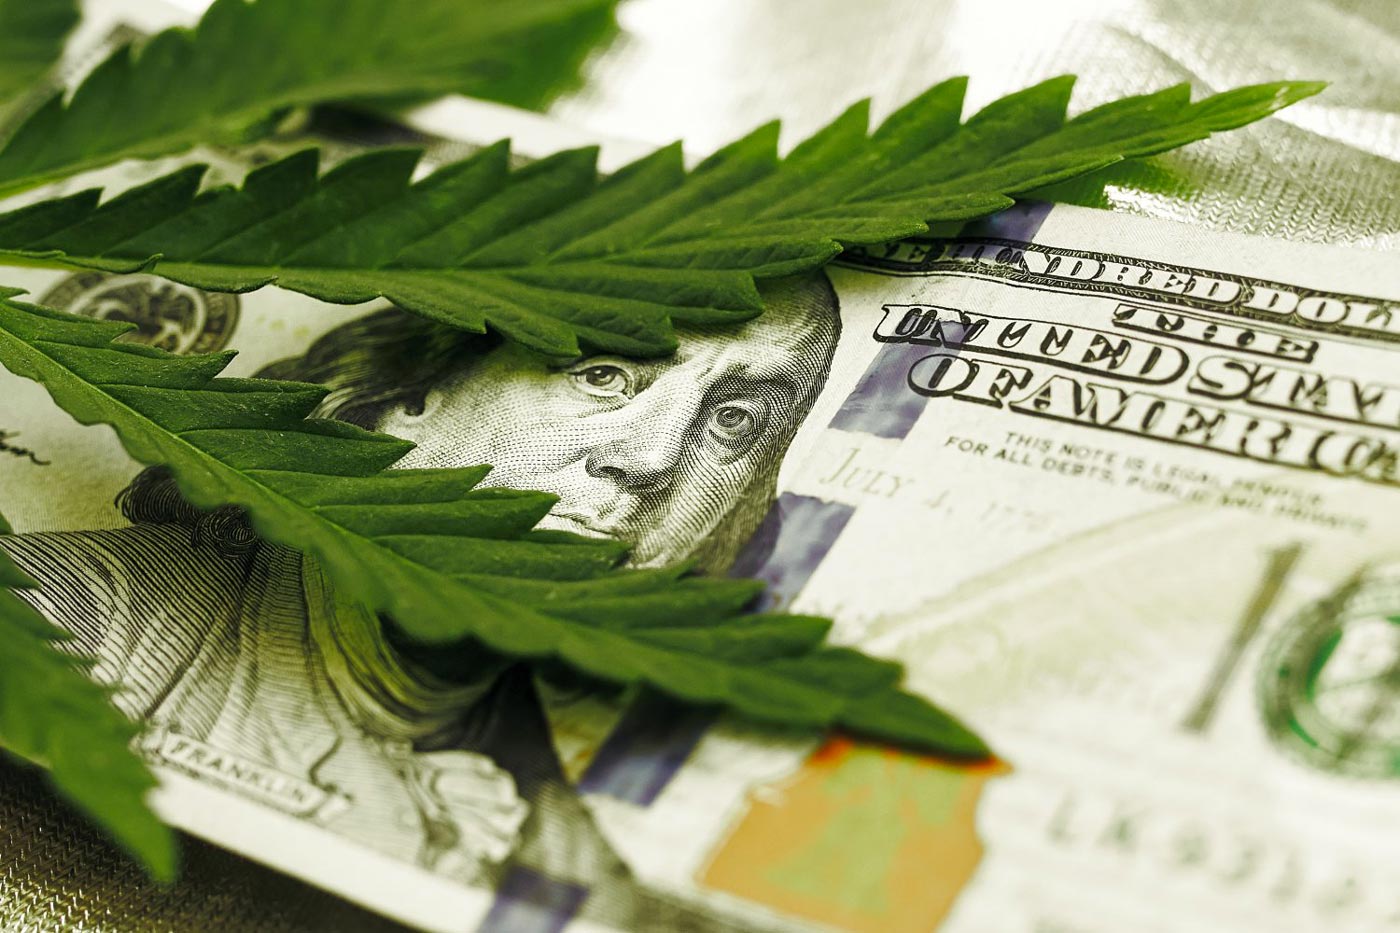 Comment investir dans le cannabis avec eToro CannabisCare CopyPortfolio ?